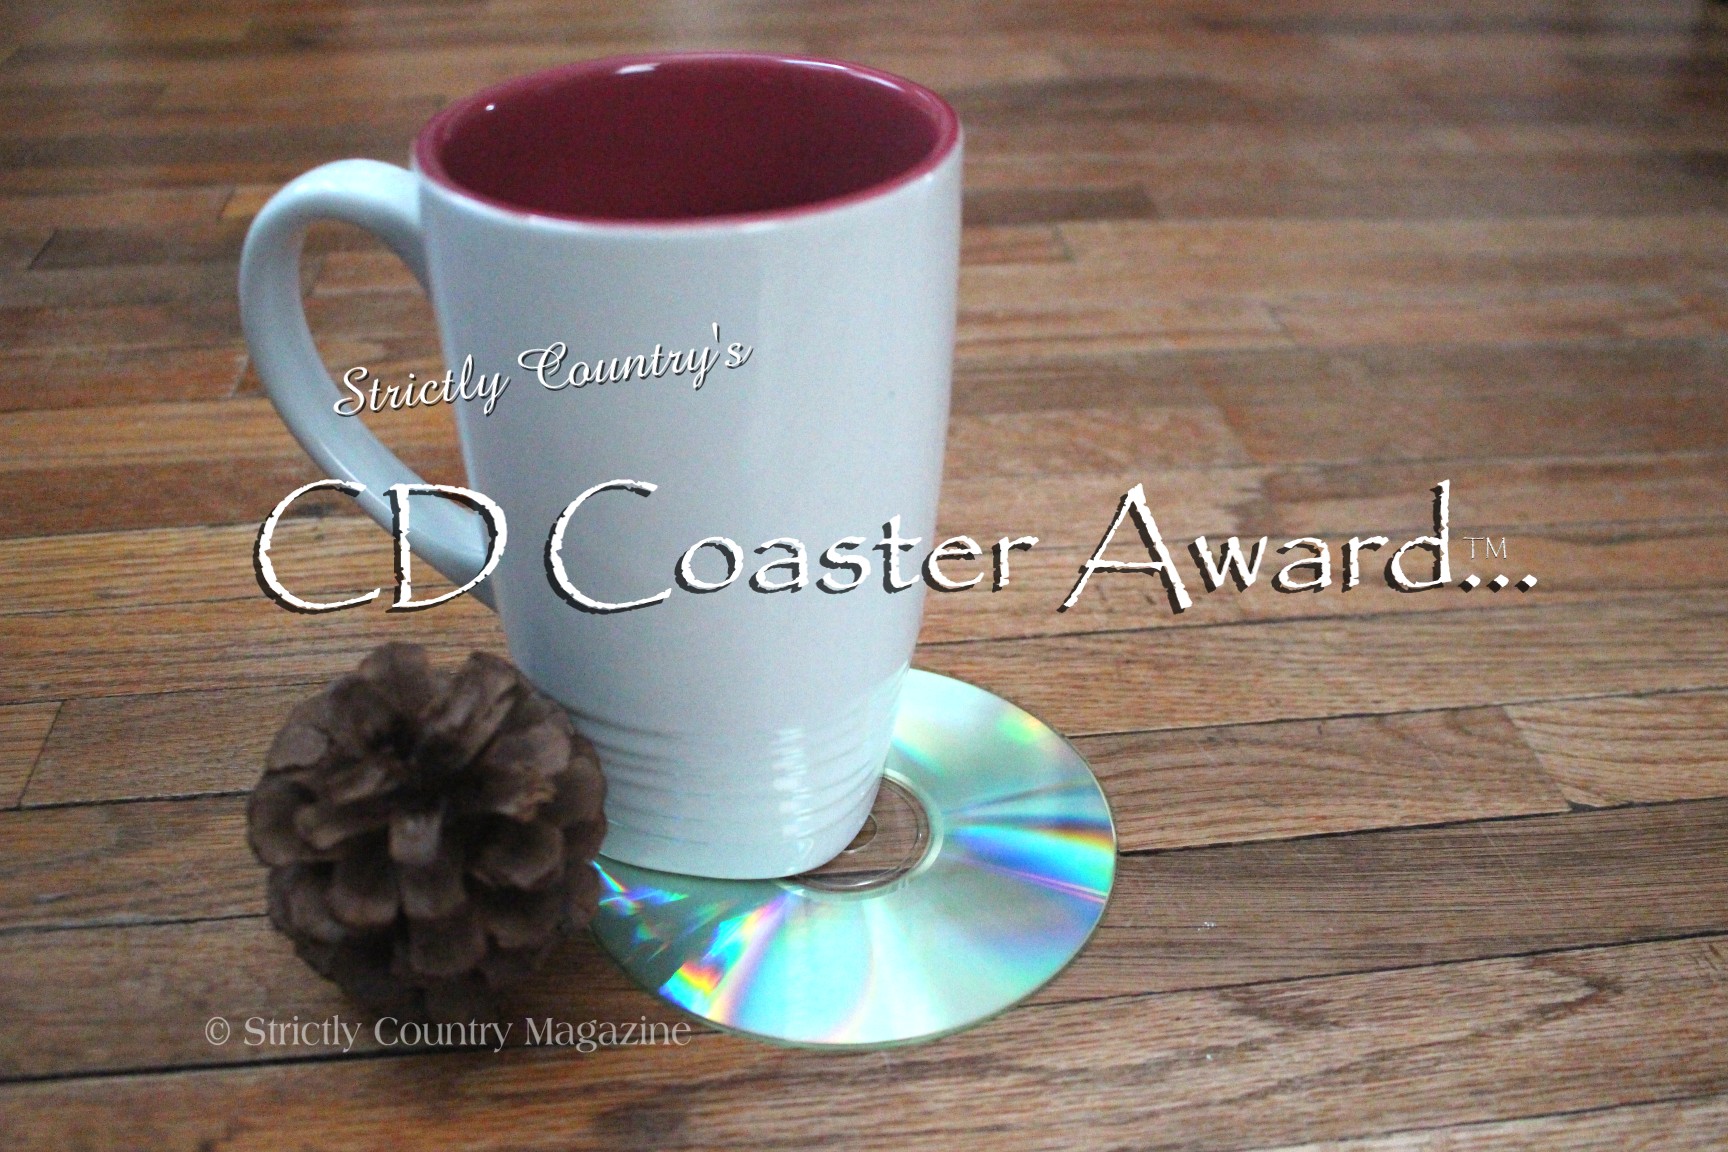 Strictly Country Magazine copyright CD Coaster Award official logo TM